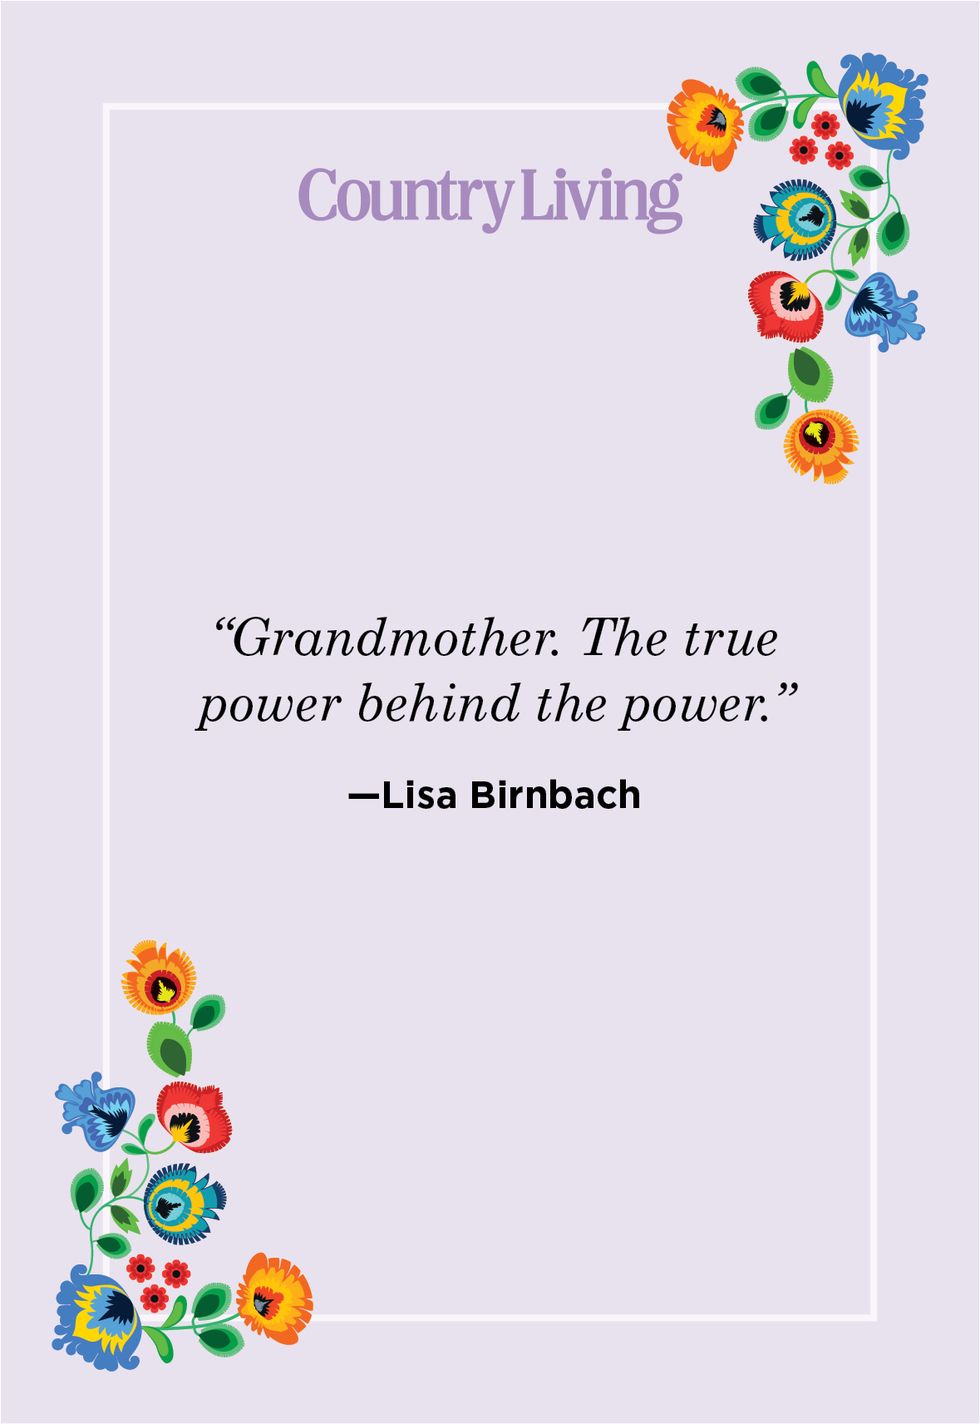 grandma quote by lisa birnbach